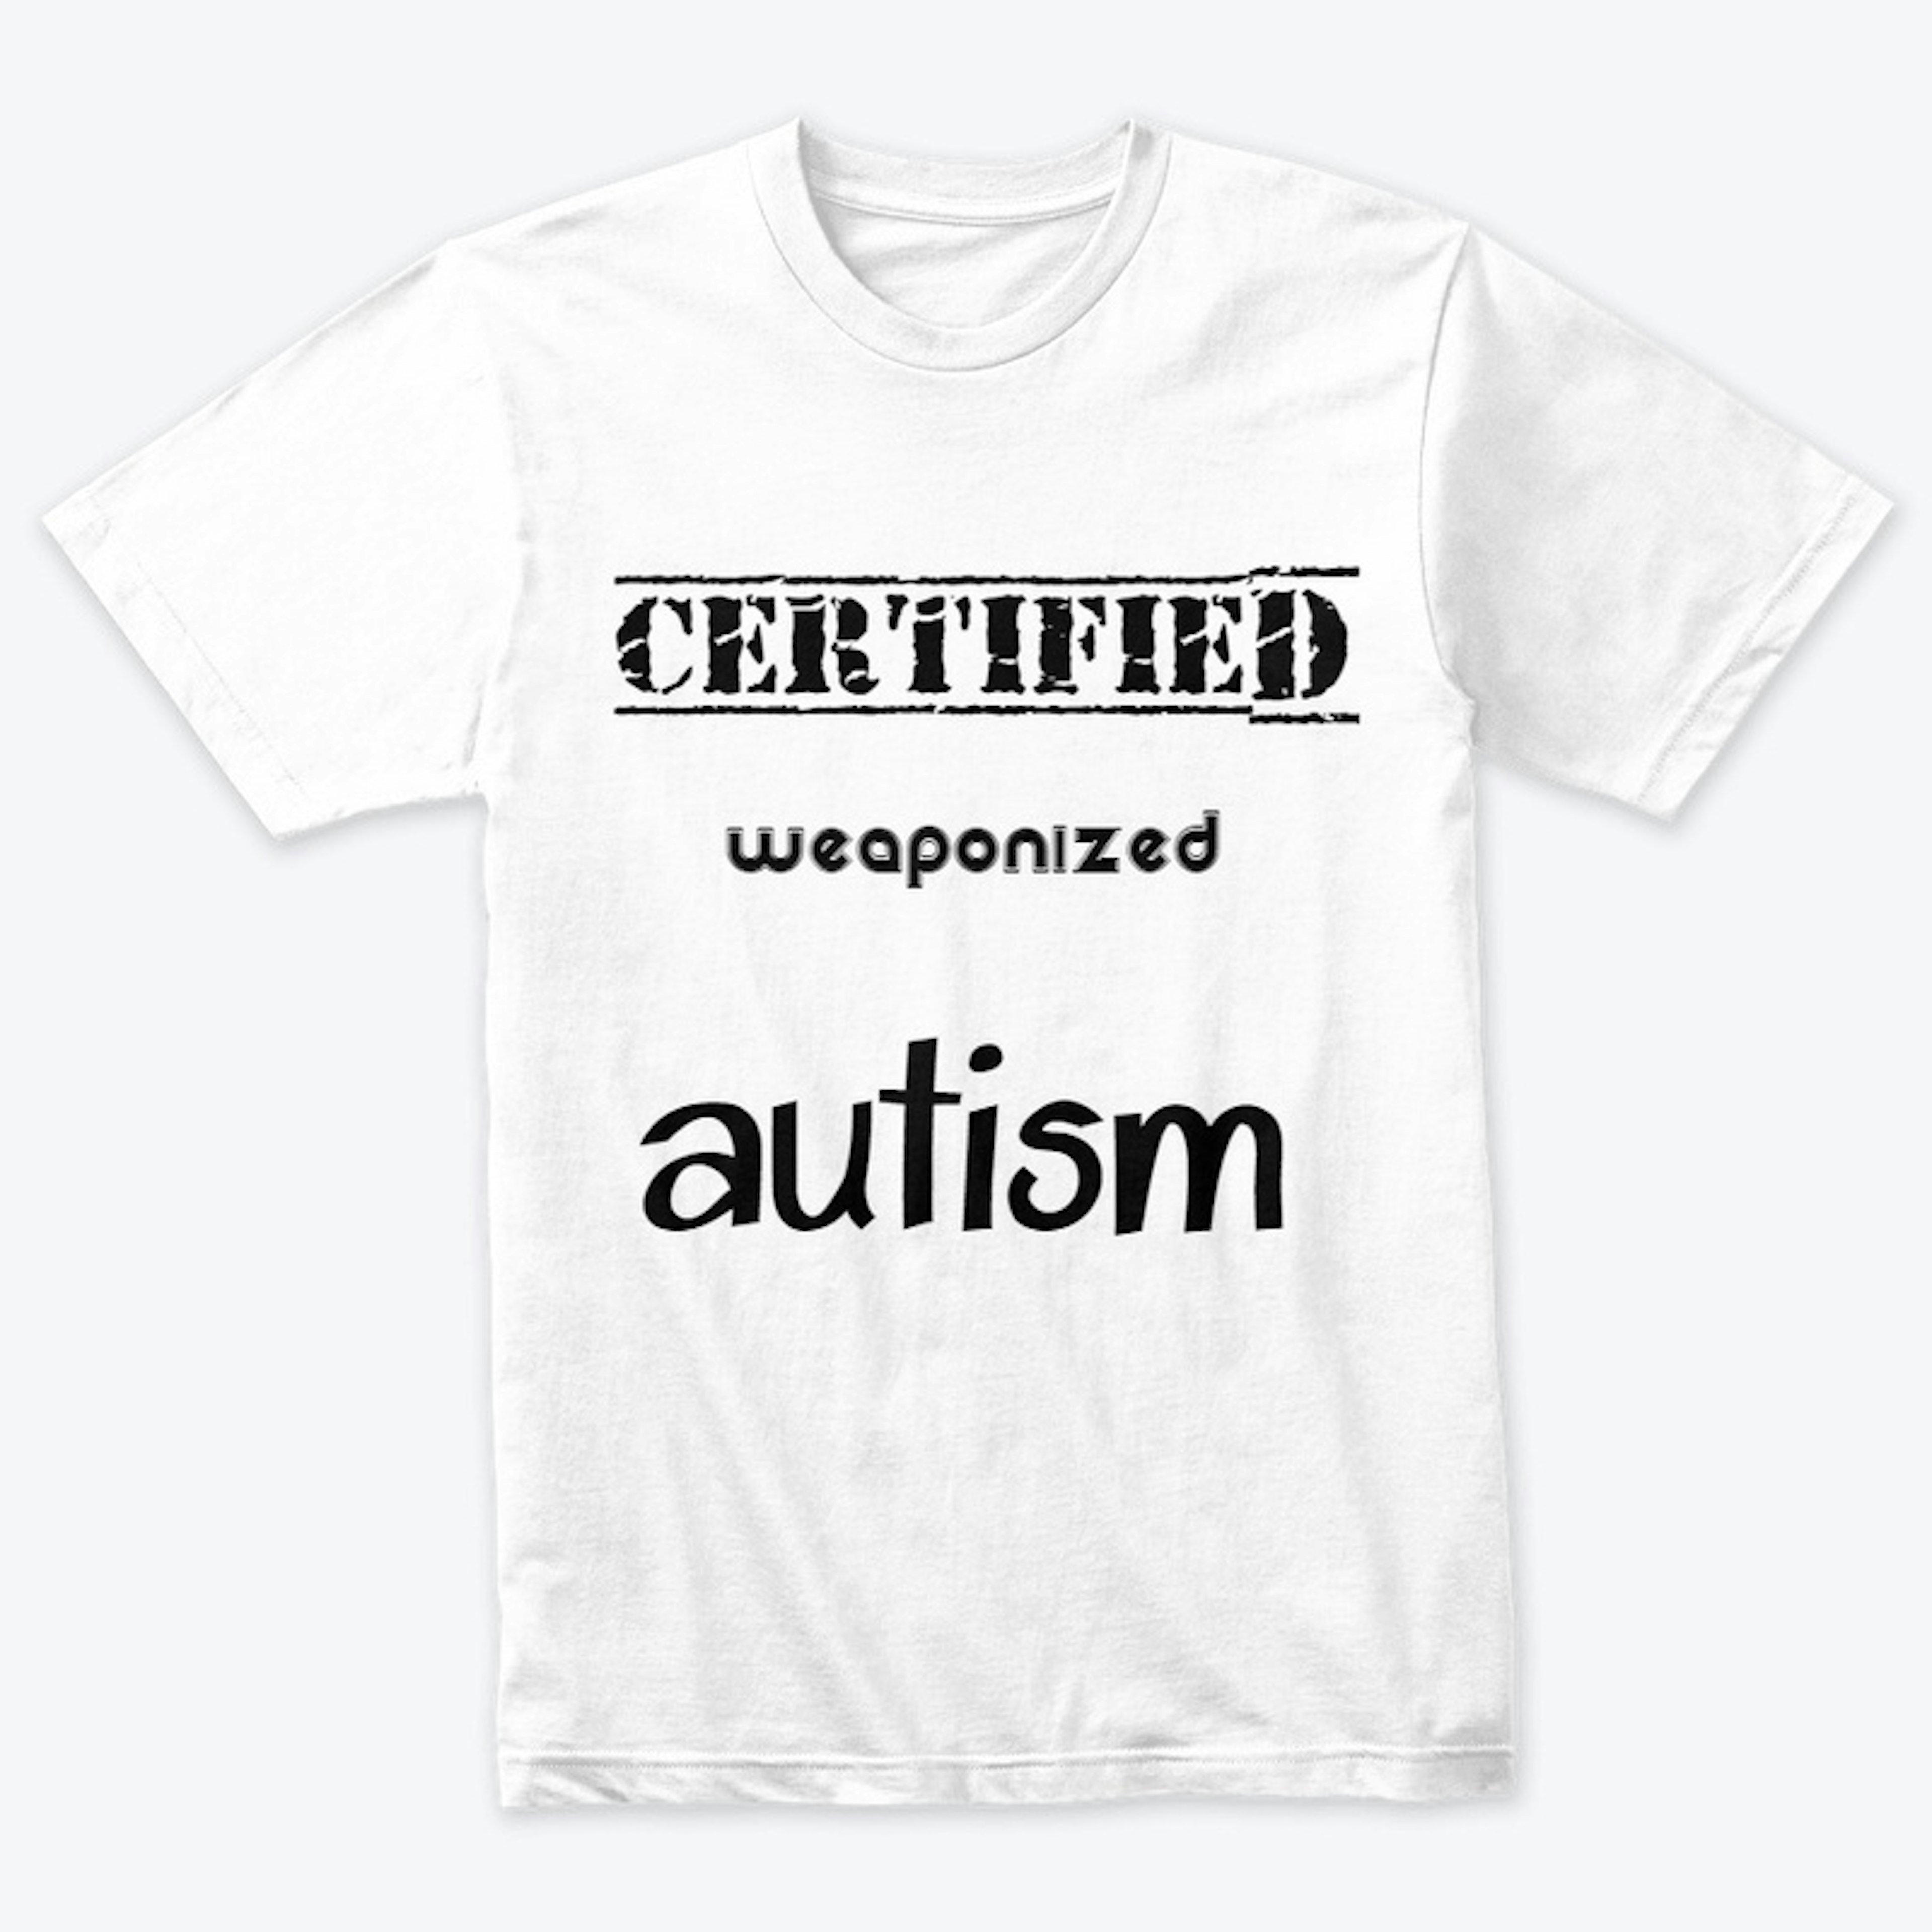 Certified weaponized autism